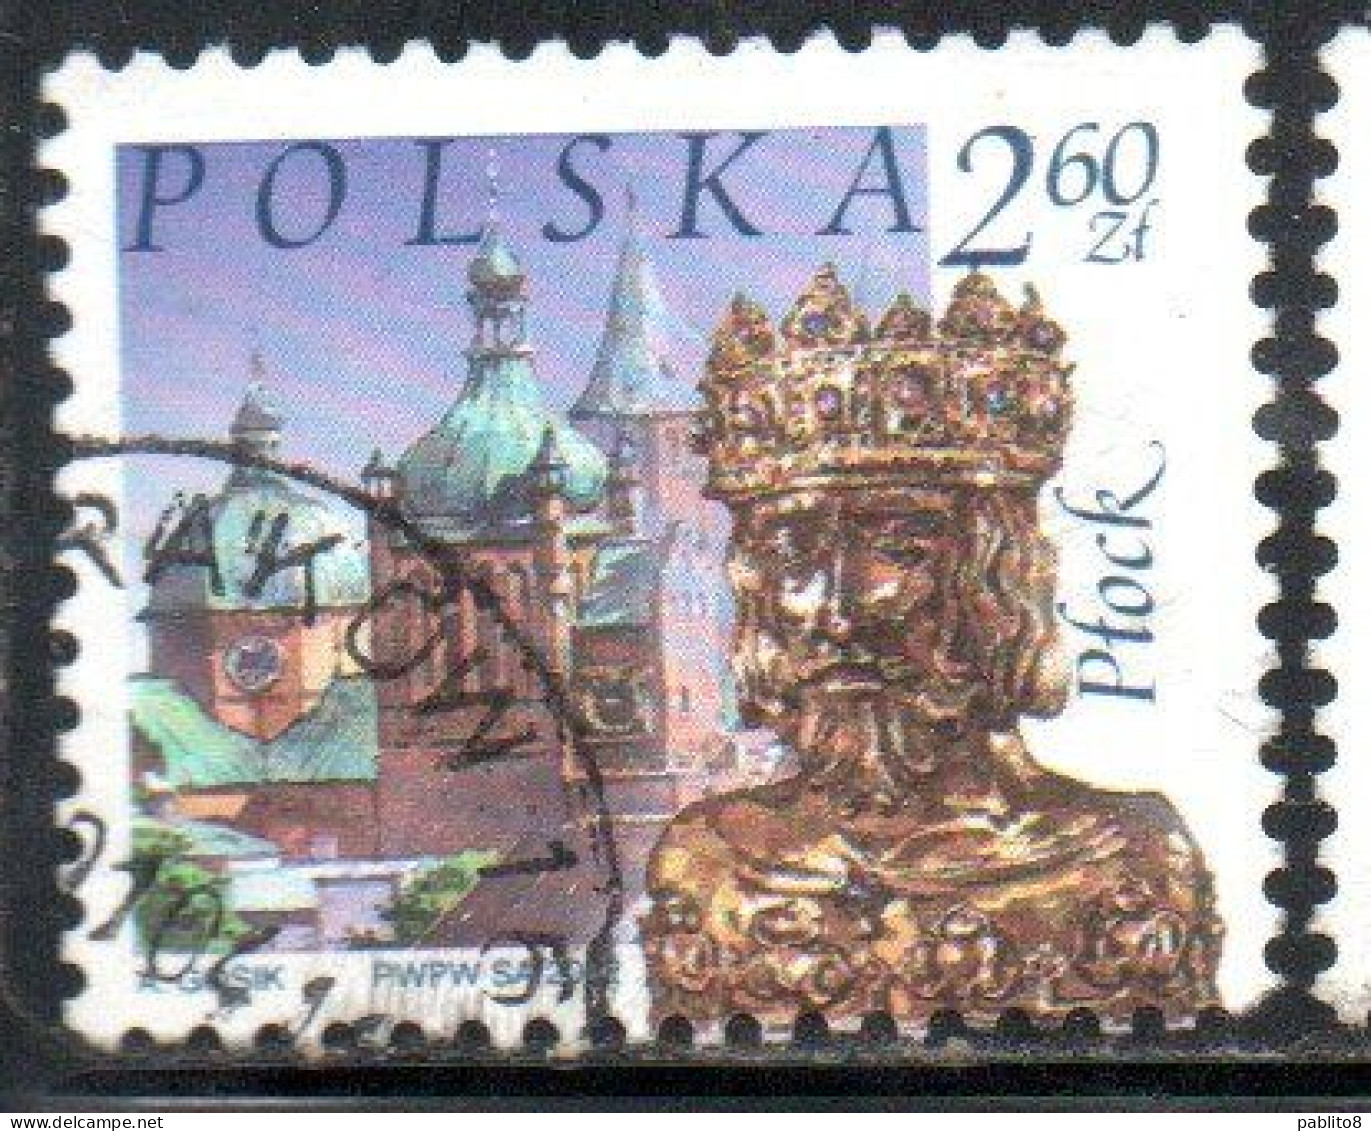 POLONIA POLAND POLSKA 2002 CITY CASTLE RELIQUARY OF ST. SIGISMUND PLOCK 2.60z USATO USED OBLITERE' - Used Stamps